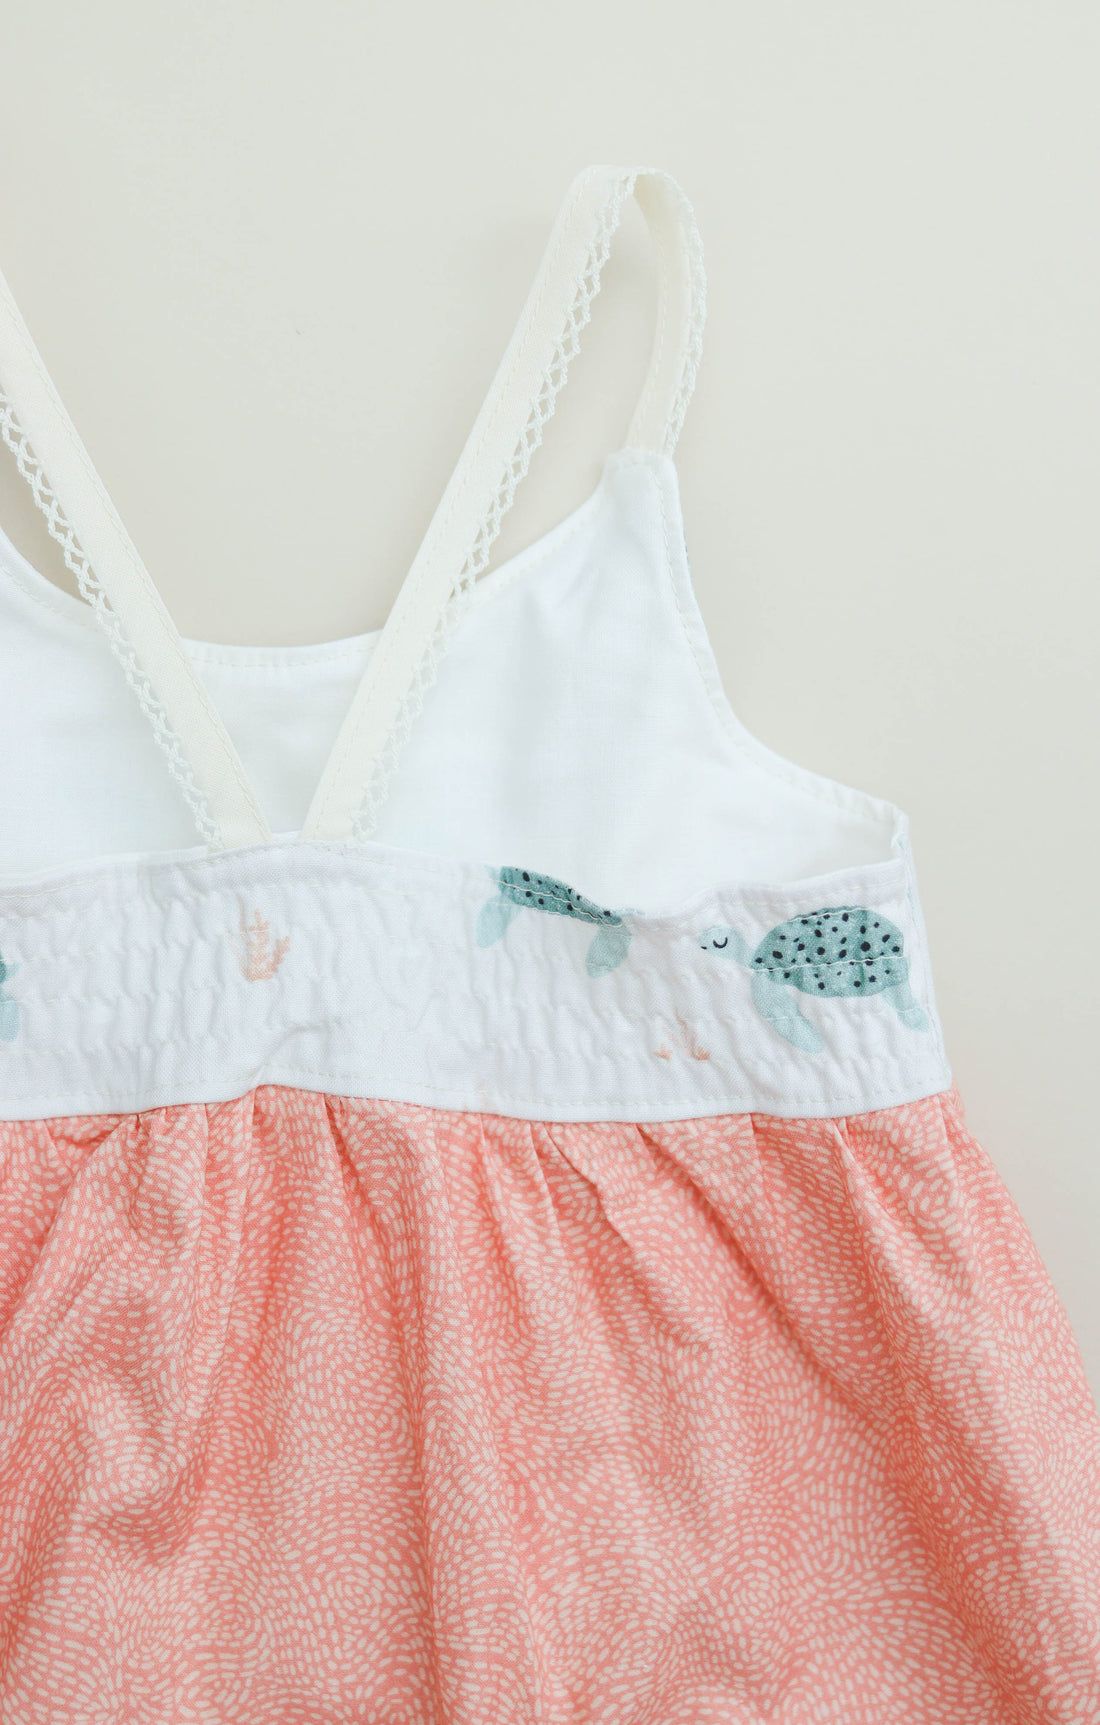 Turtle / Honu Love Girls Dress - Toddler Dress - Baby Girl Dress - Made in Hawaii